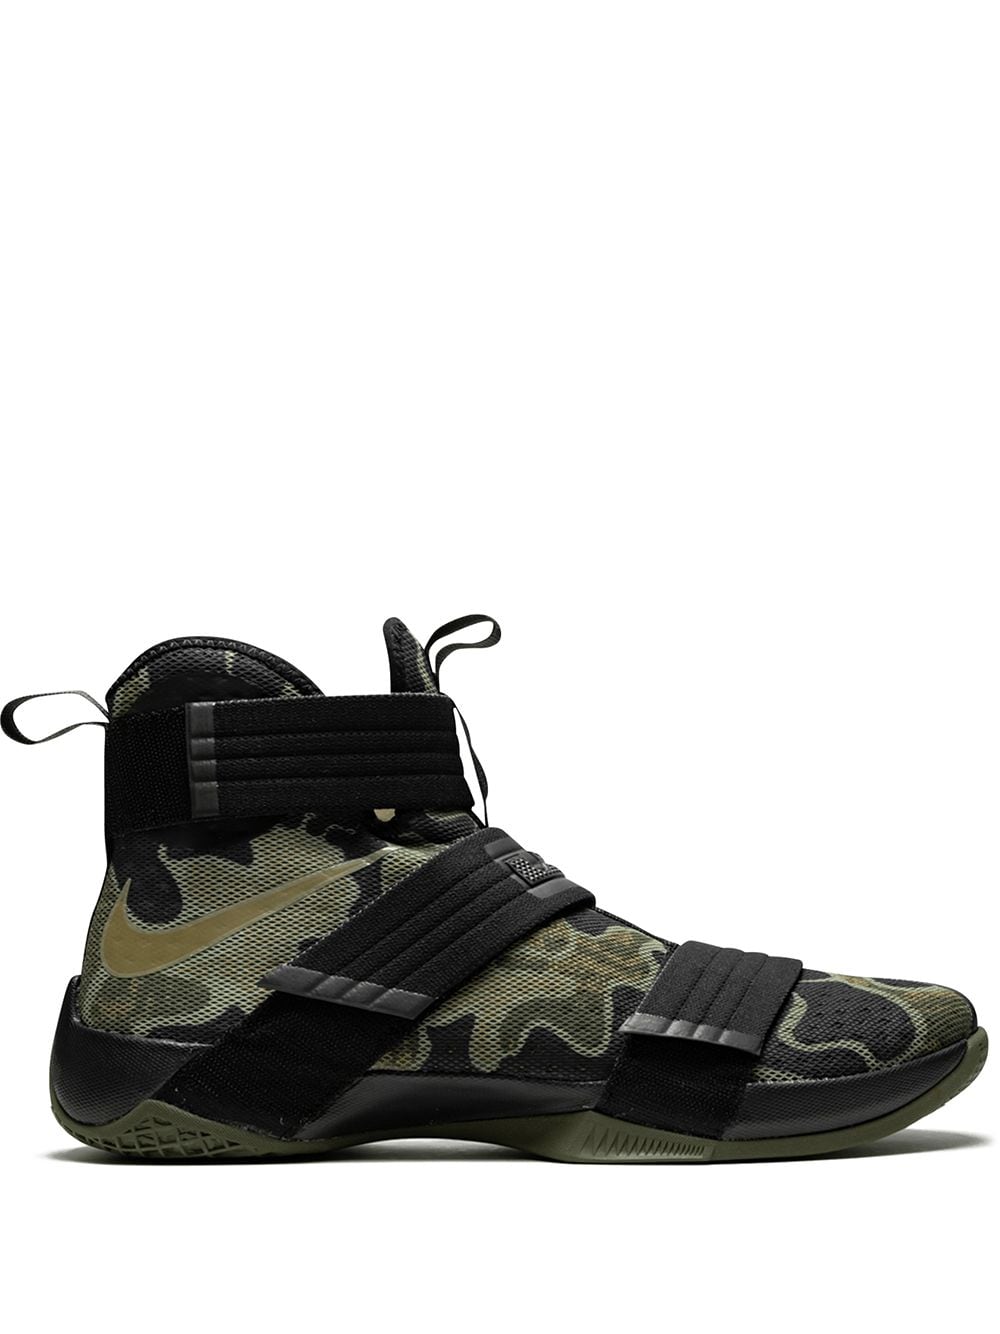 Nike Lebron Soldier 10 SFG Sneakers - Farfetch